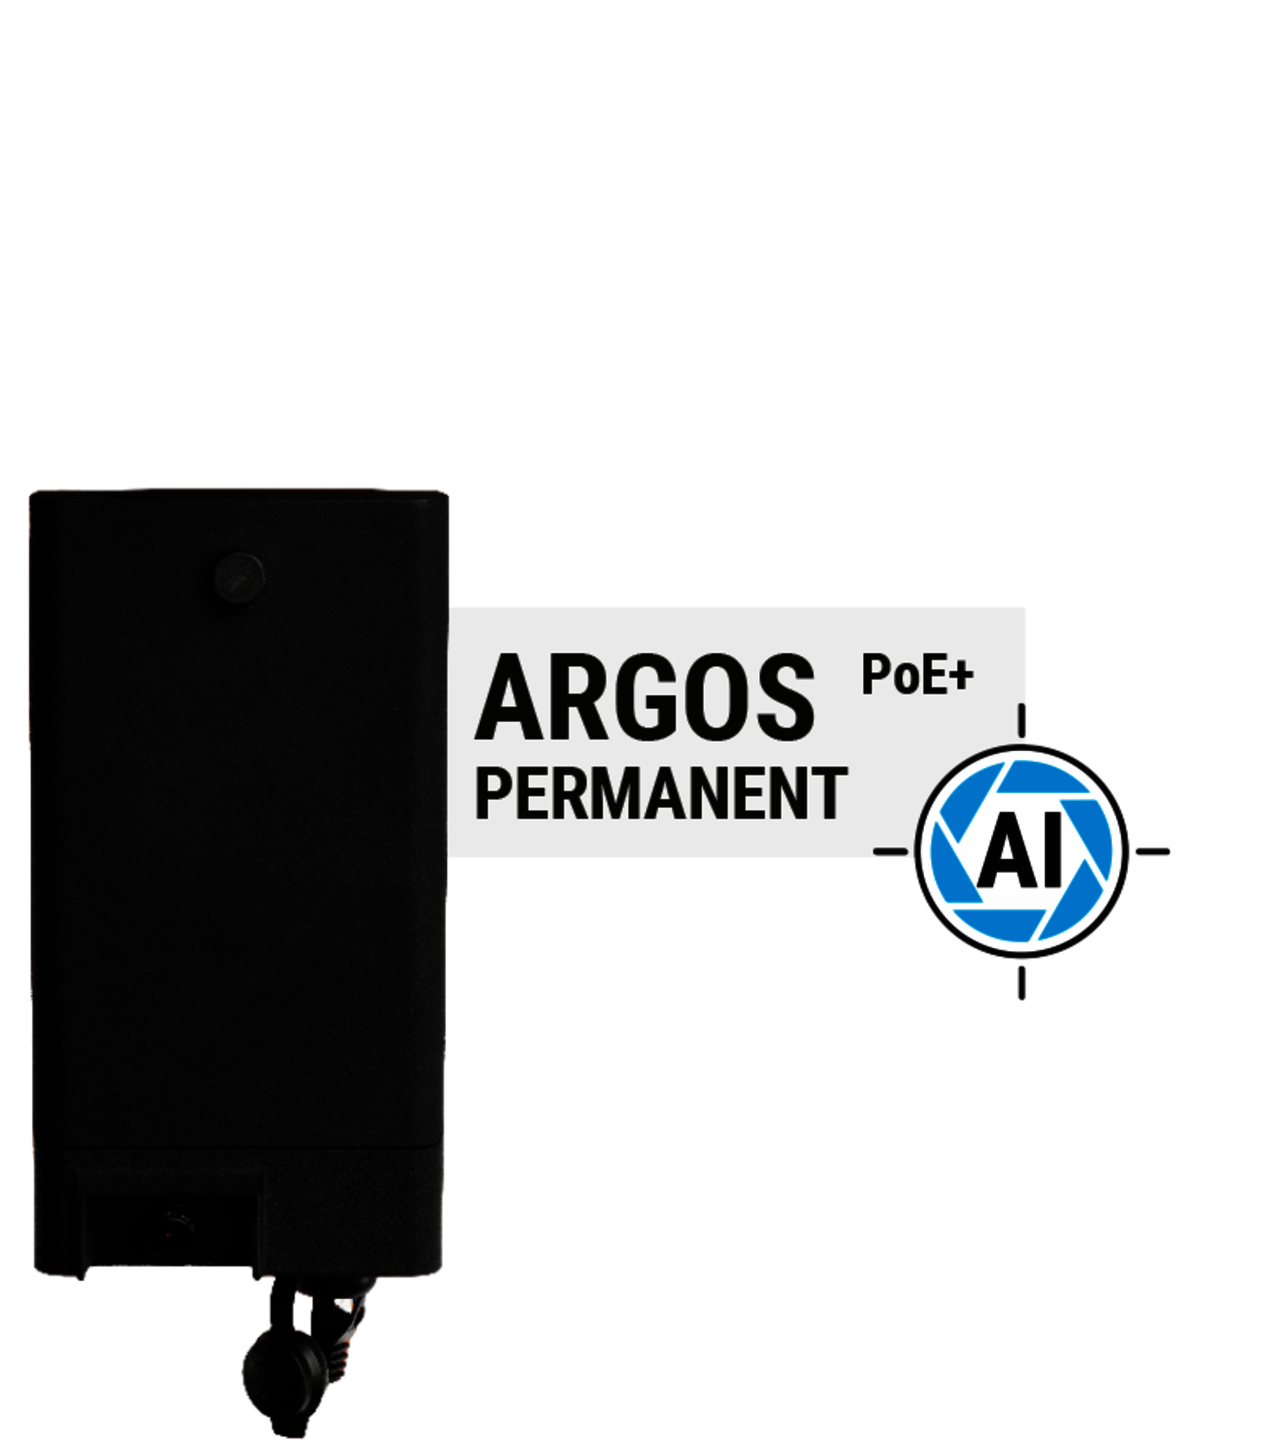  ARGOS permanent PoE - artificial intelligence